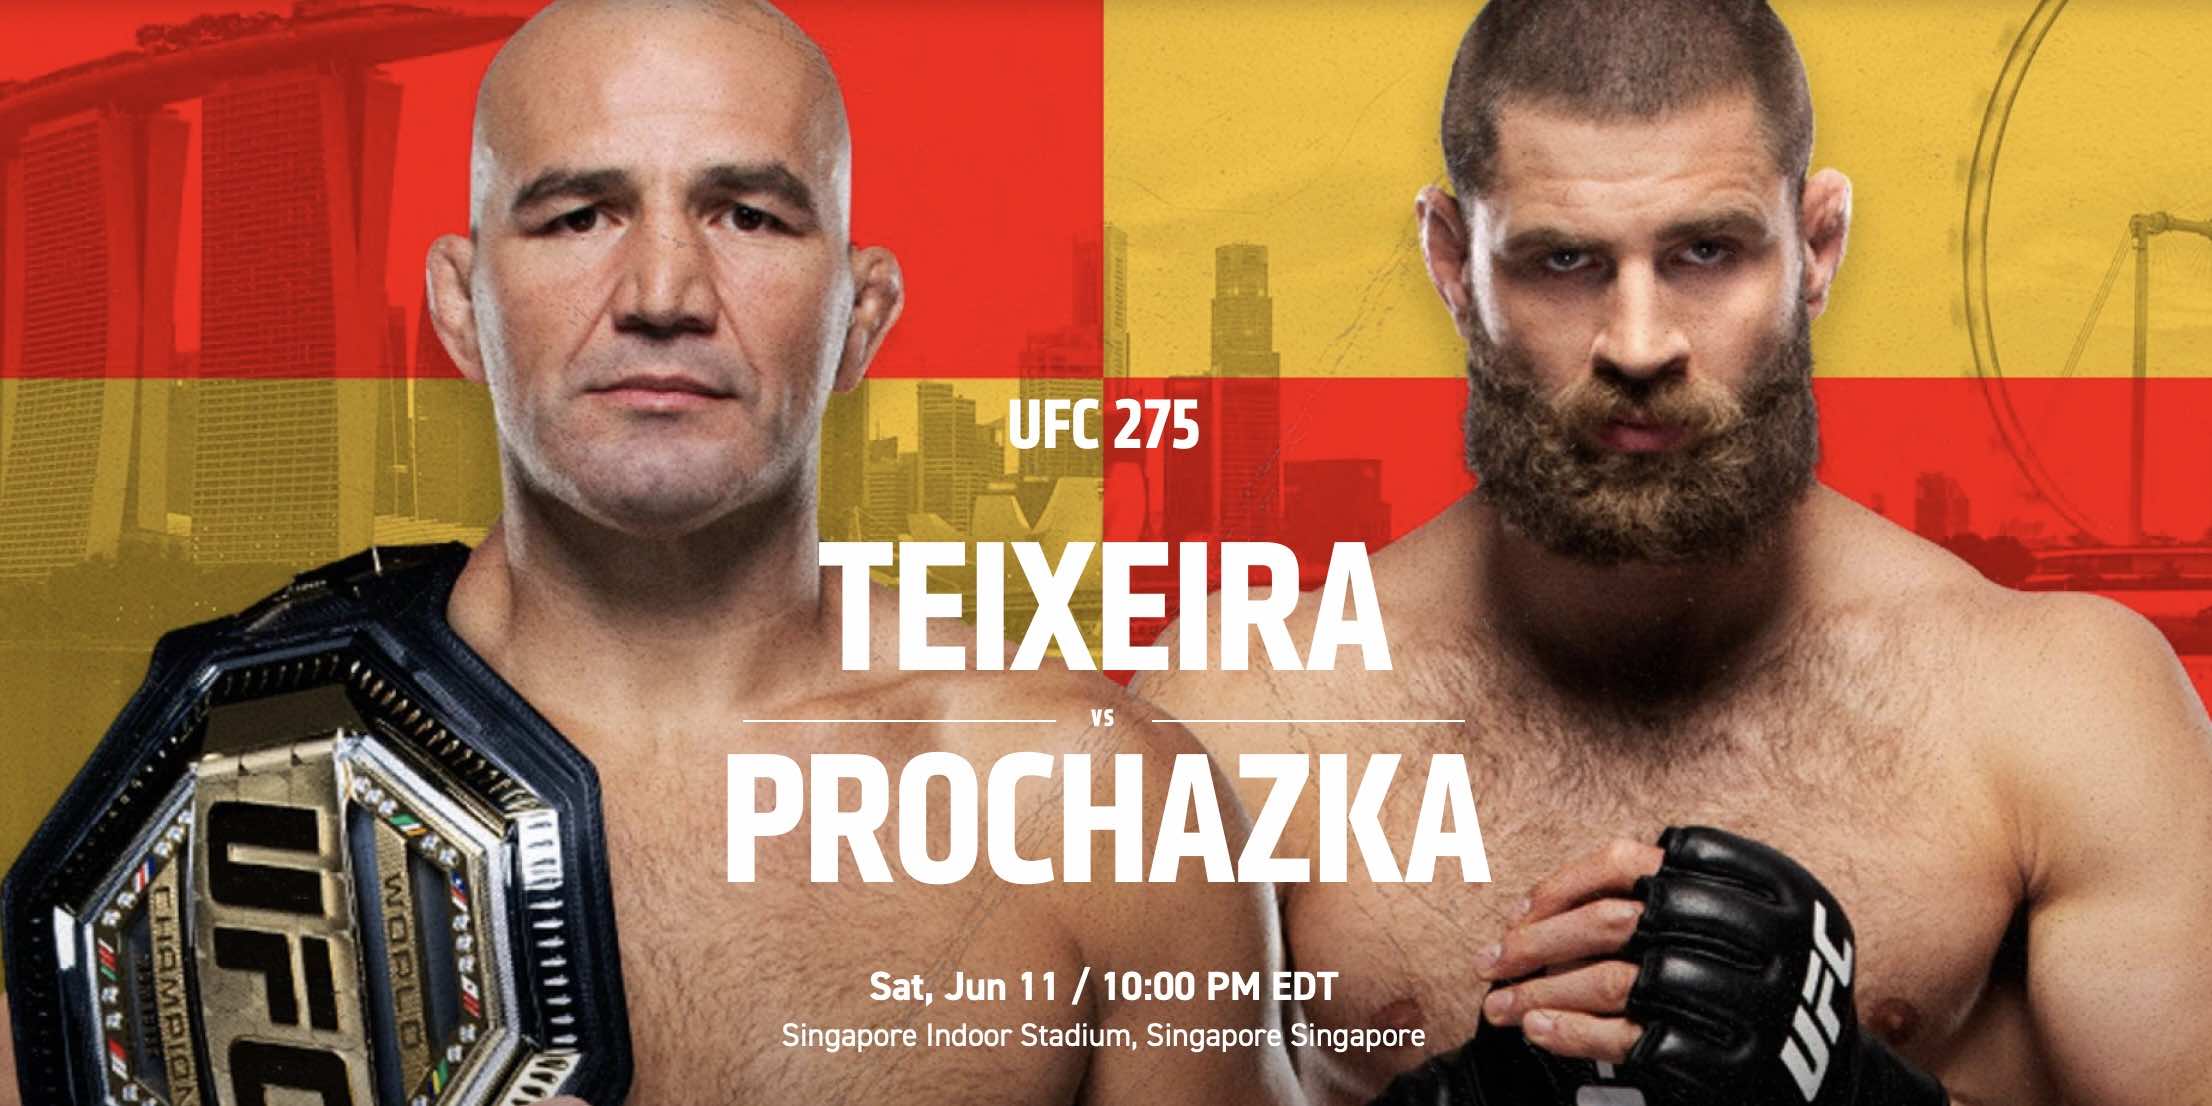 How to watch UFC 275 Teixeira vs Prochazka on iPhone, Apple TV, web